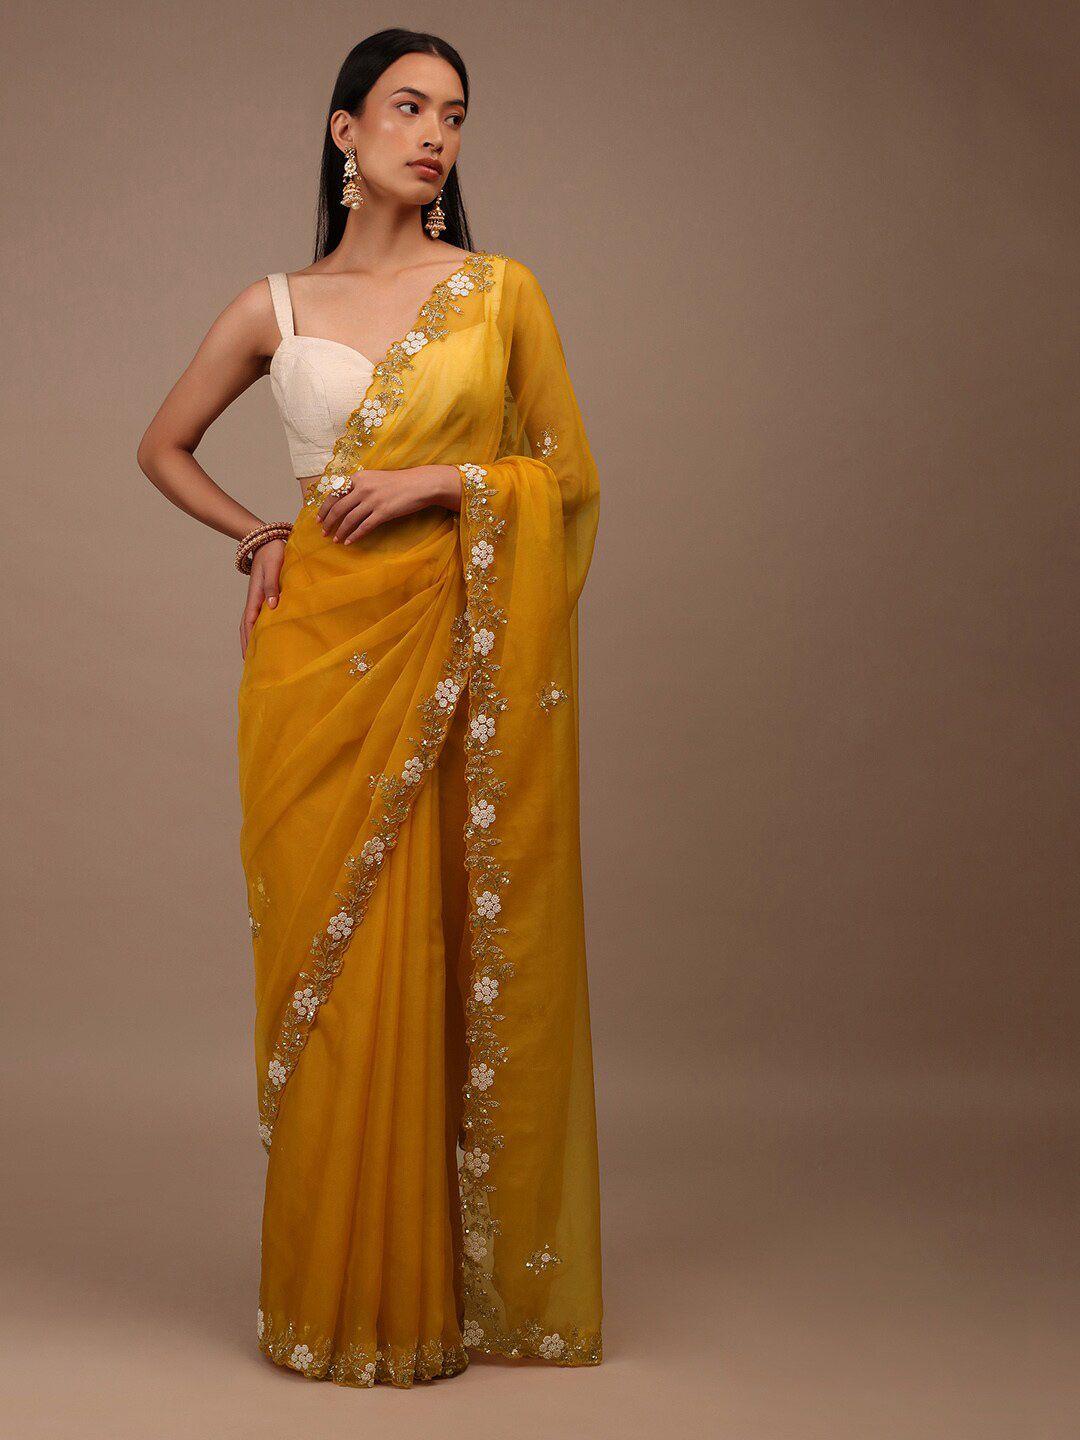 kalki fashion beads and stones embellished saree